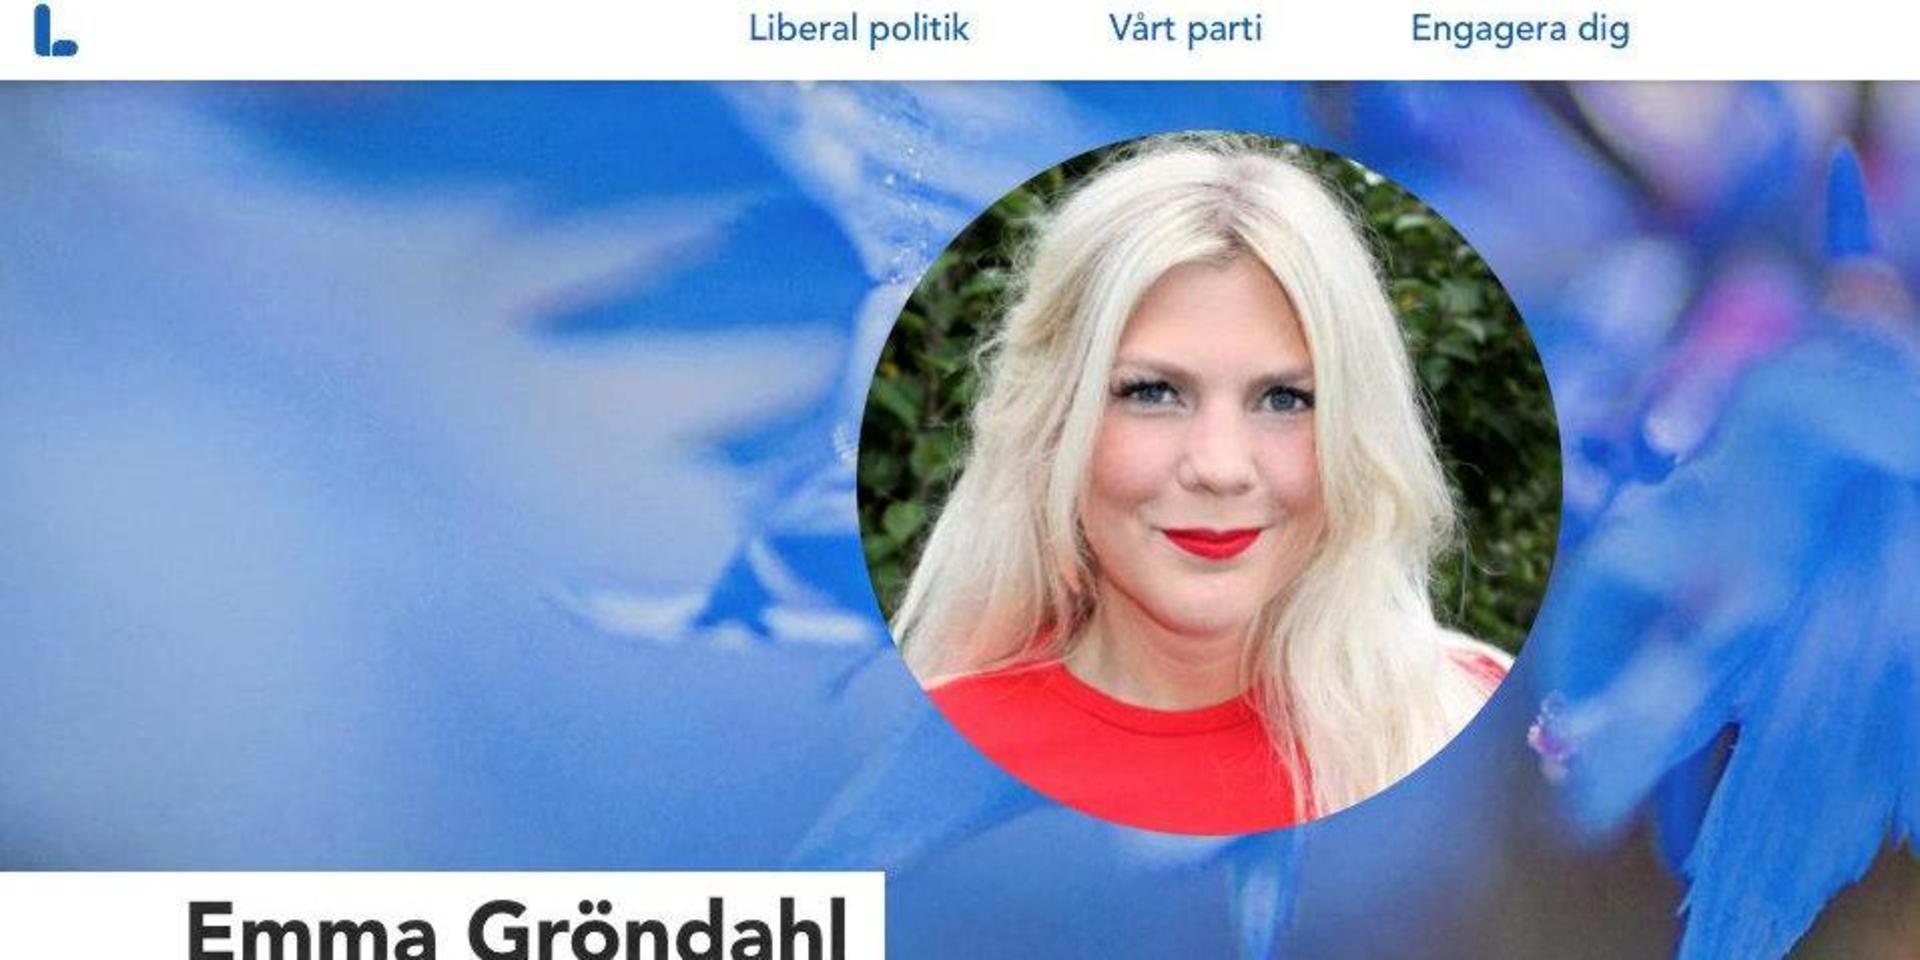 Den tidigare Laholmspolitikern Emma Gröndahl blev på nytt invald i Liberalernas partistyrelse senast i november 2019.